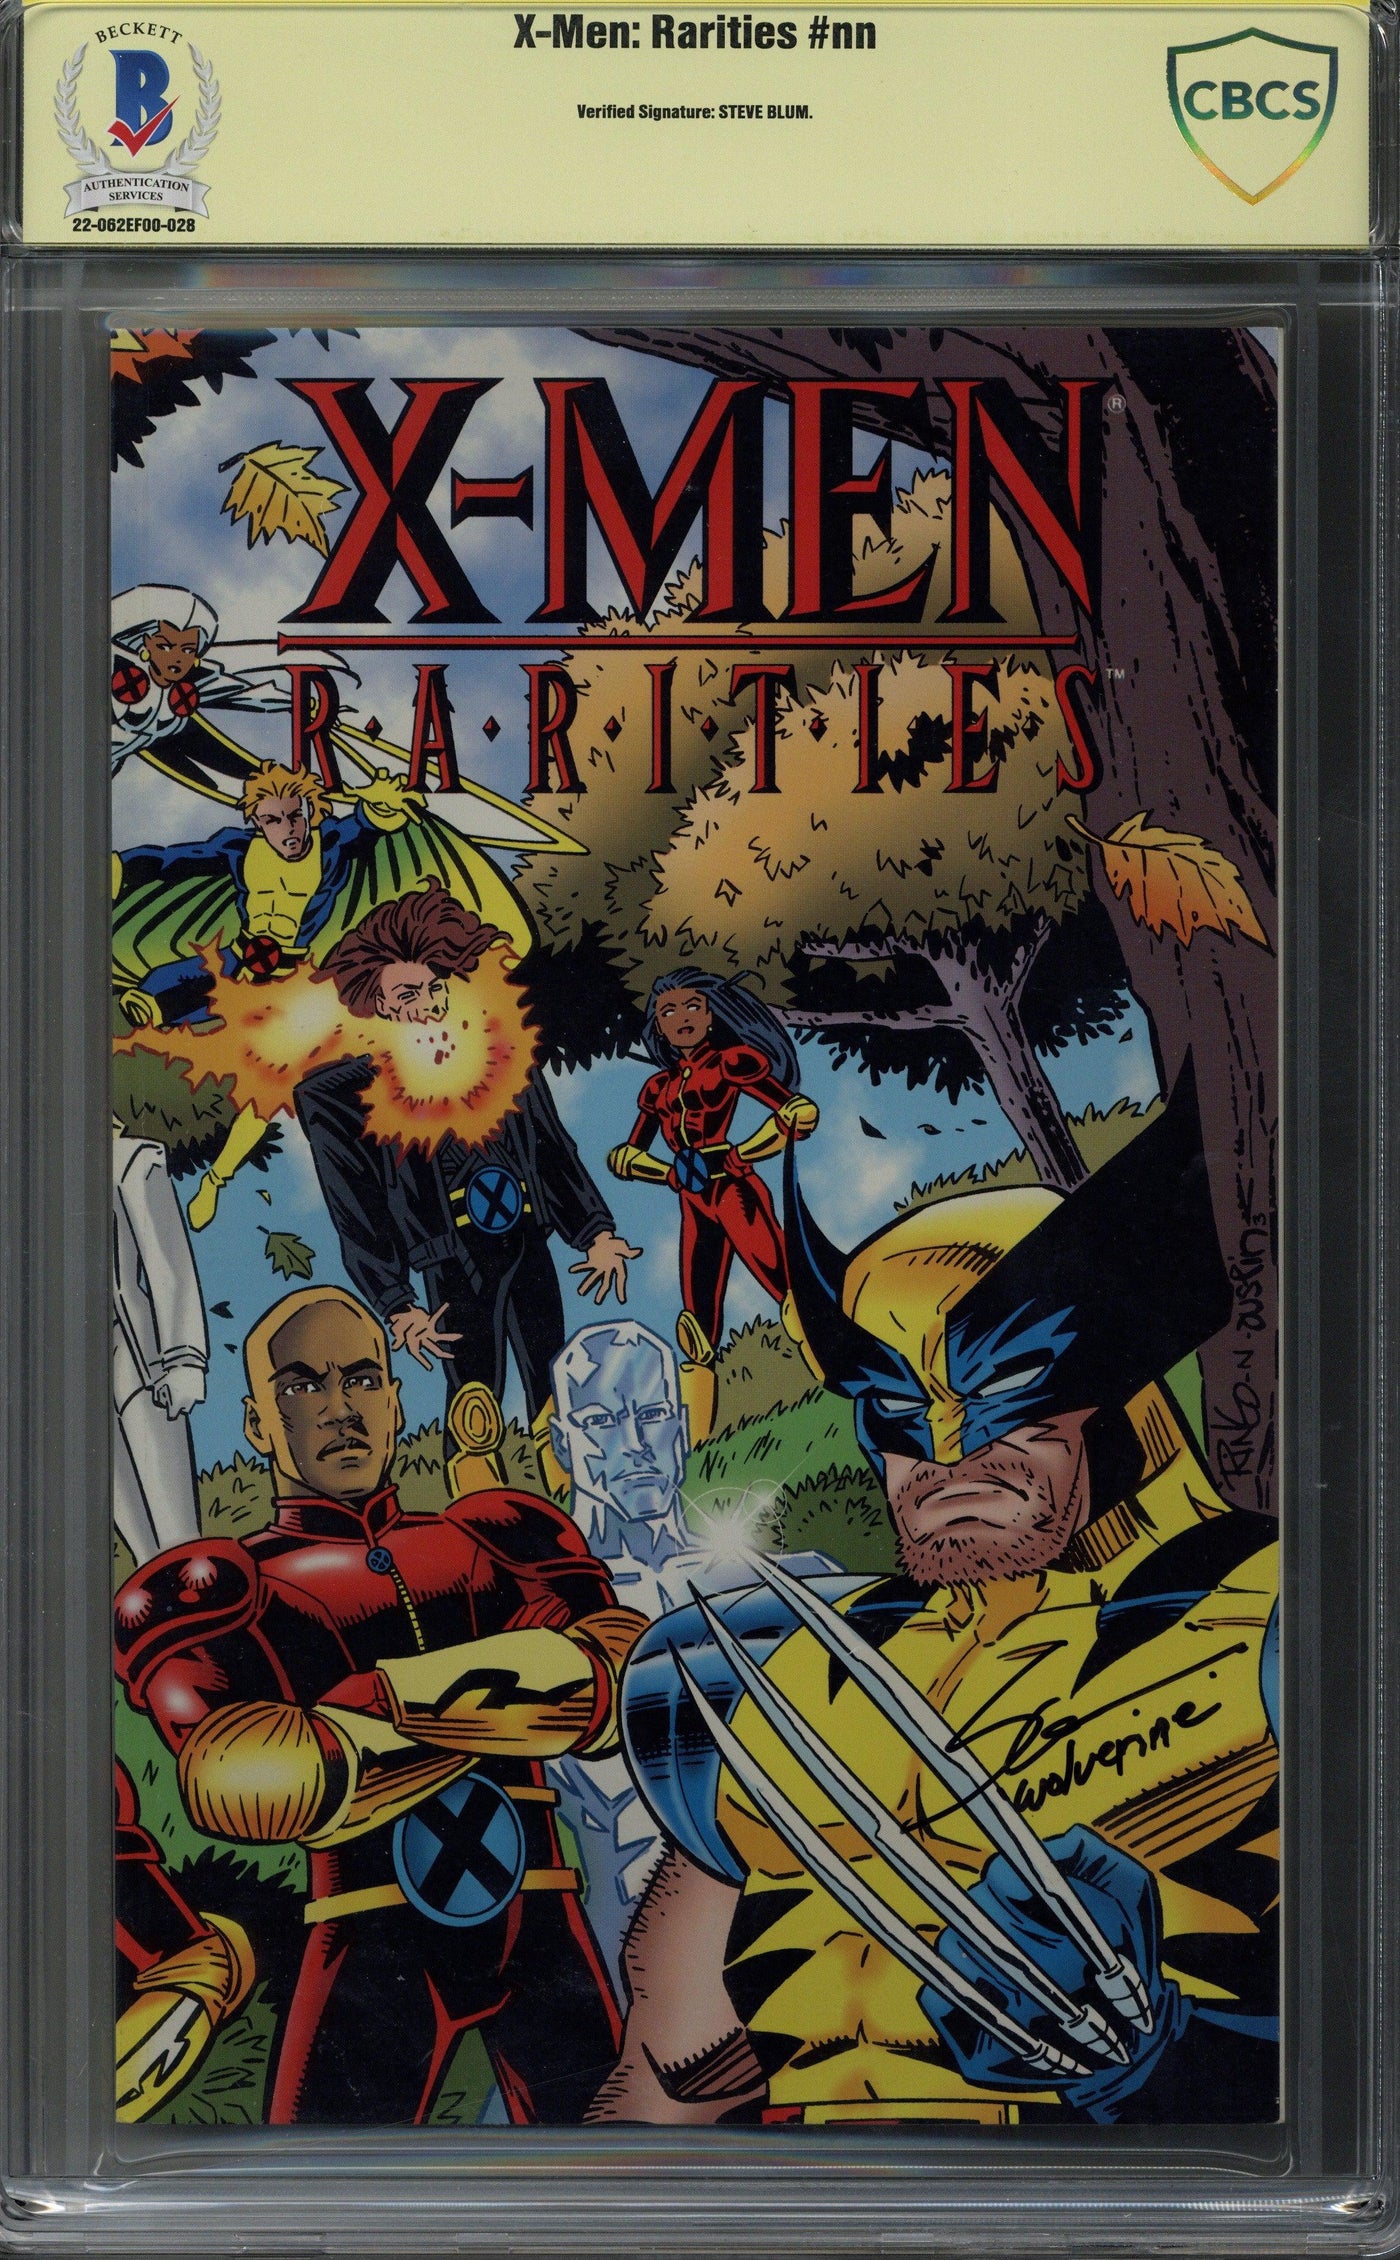 Steve Blum Signed X-Men: Rarities #NNComic Book CBCS - Wolverine Voice Actor